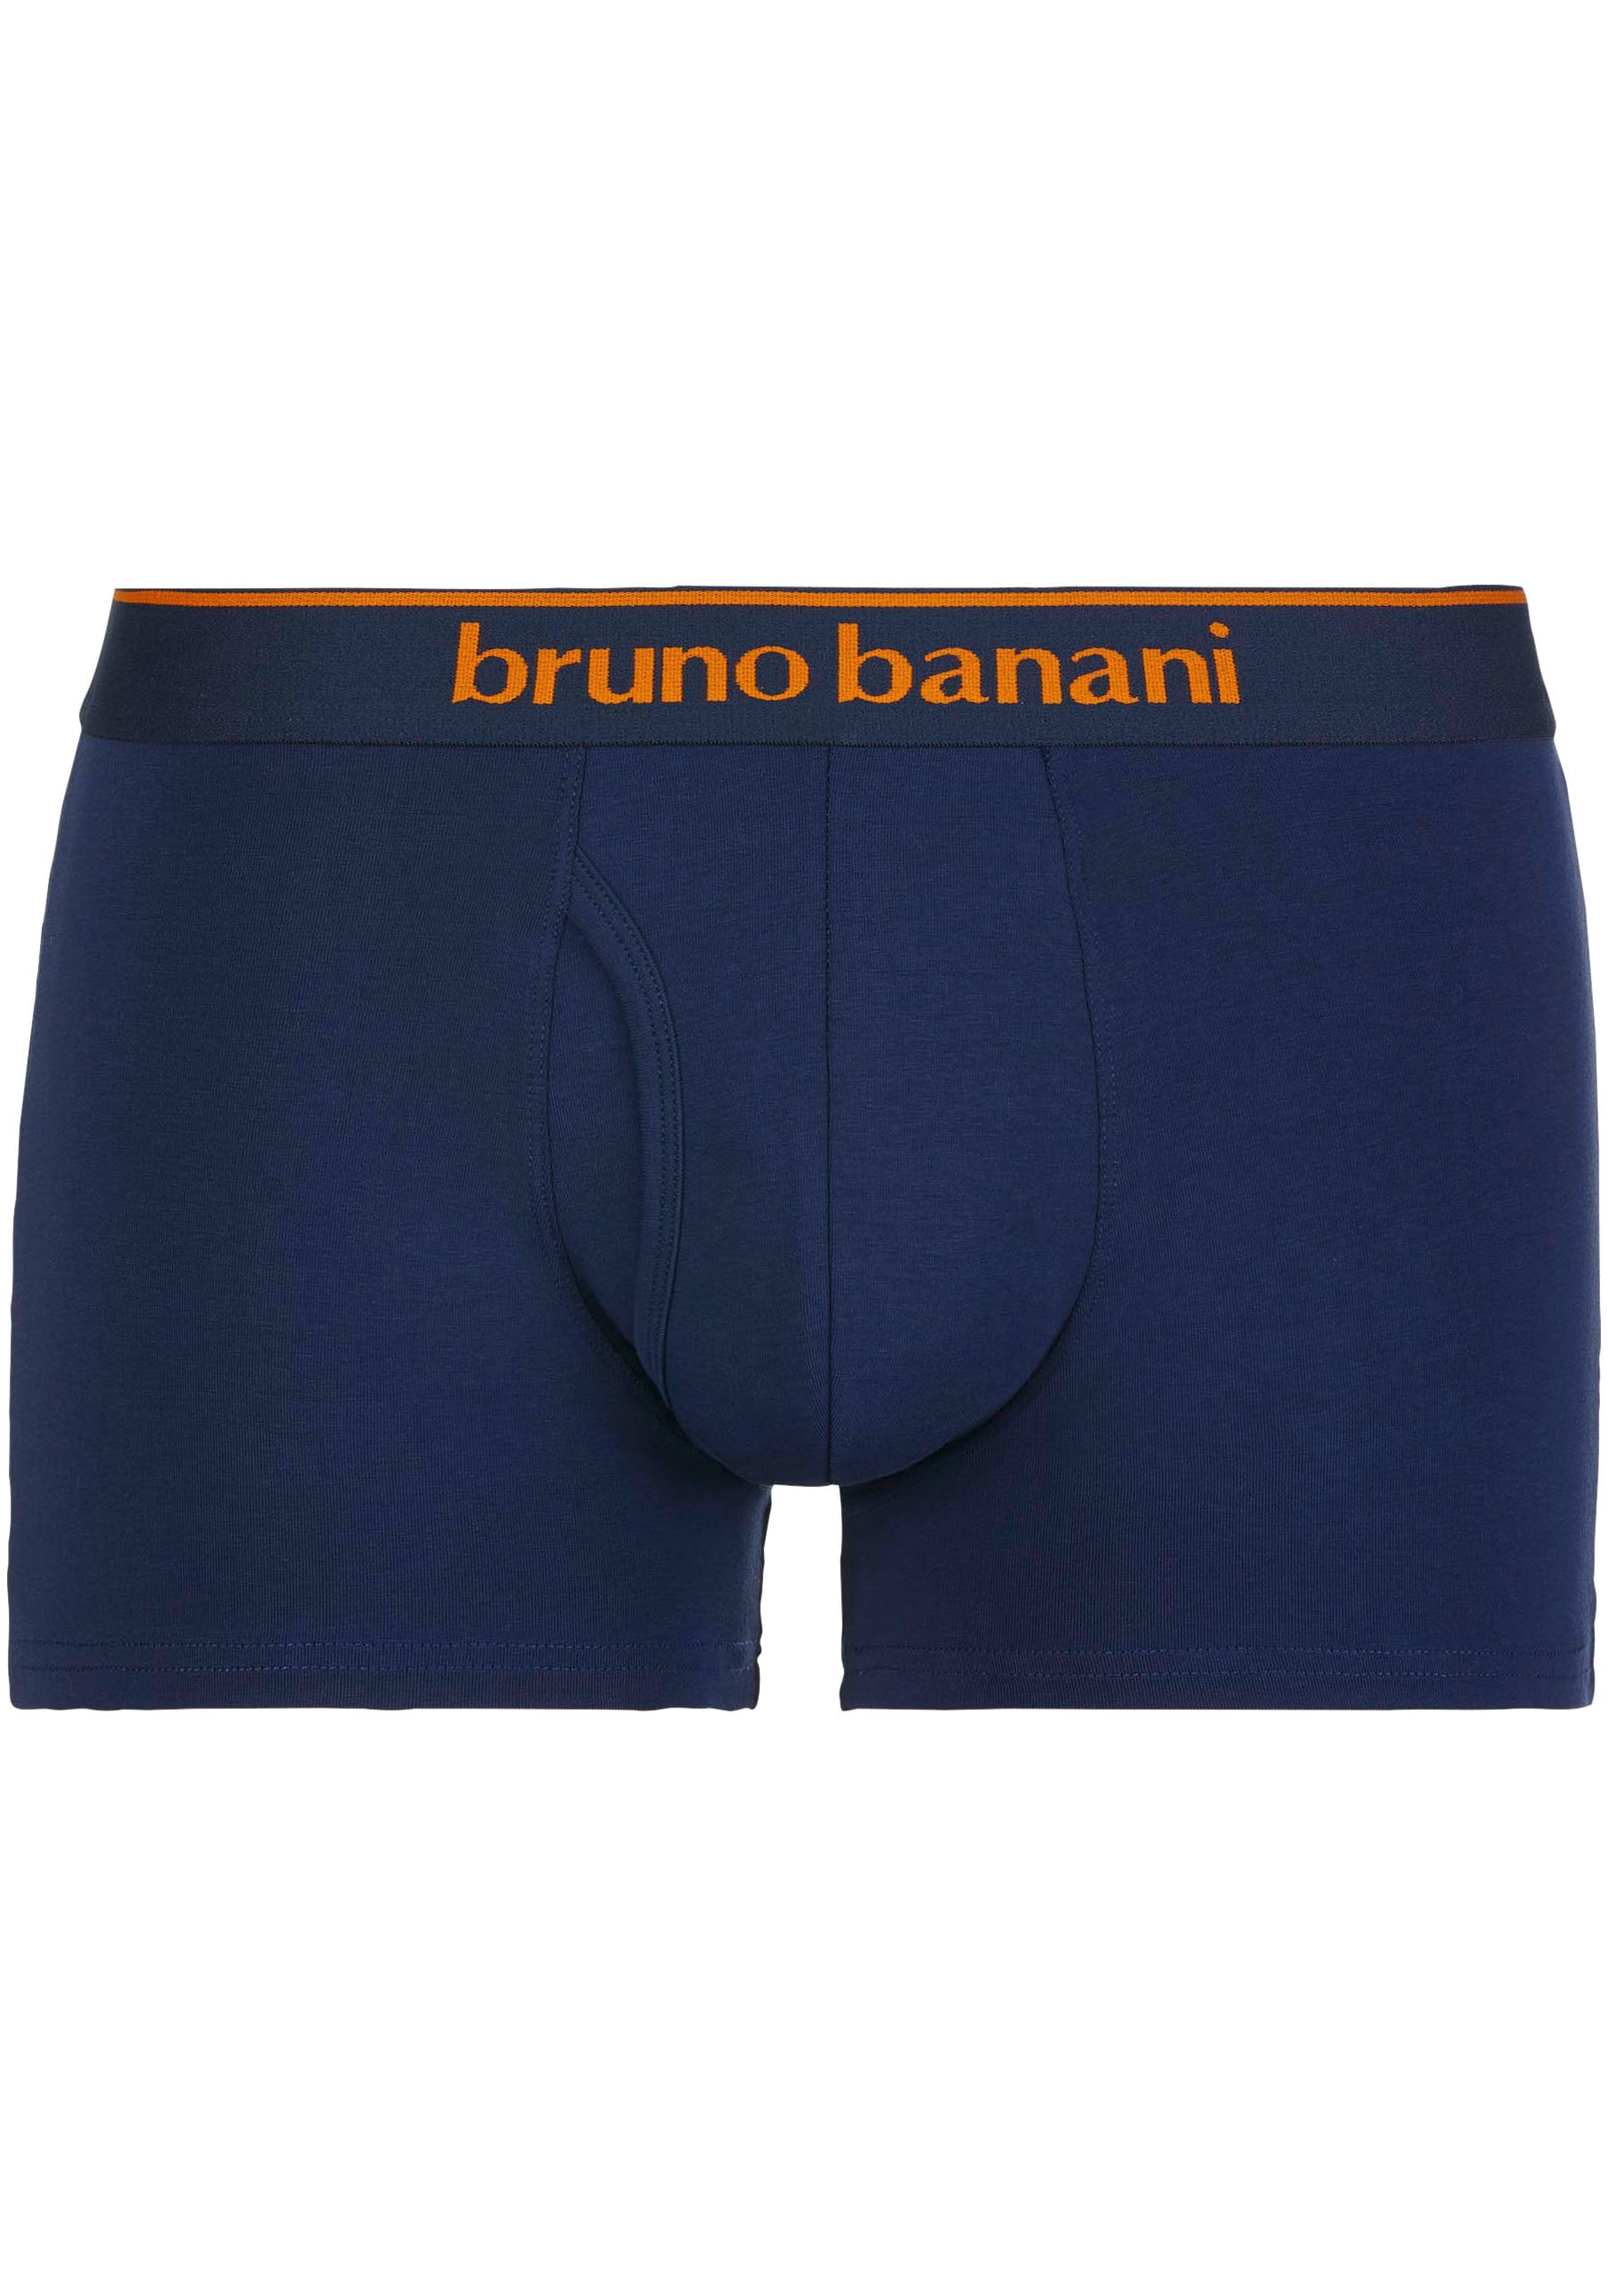 OTTO Banani Details Kontrastfarbene Quick kaufen (Packung, St.), Access«, 2 online »Short 2Pack bei Boxershorts Bruno